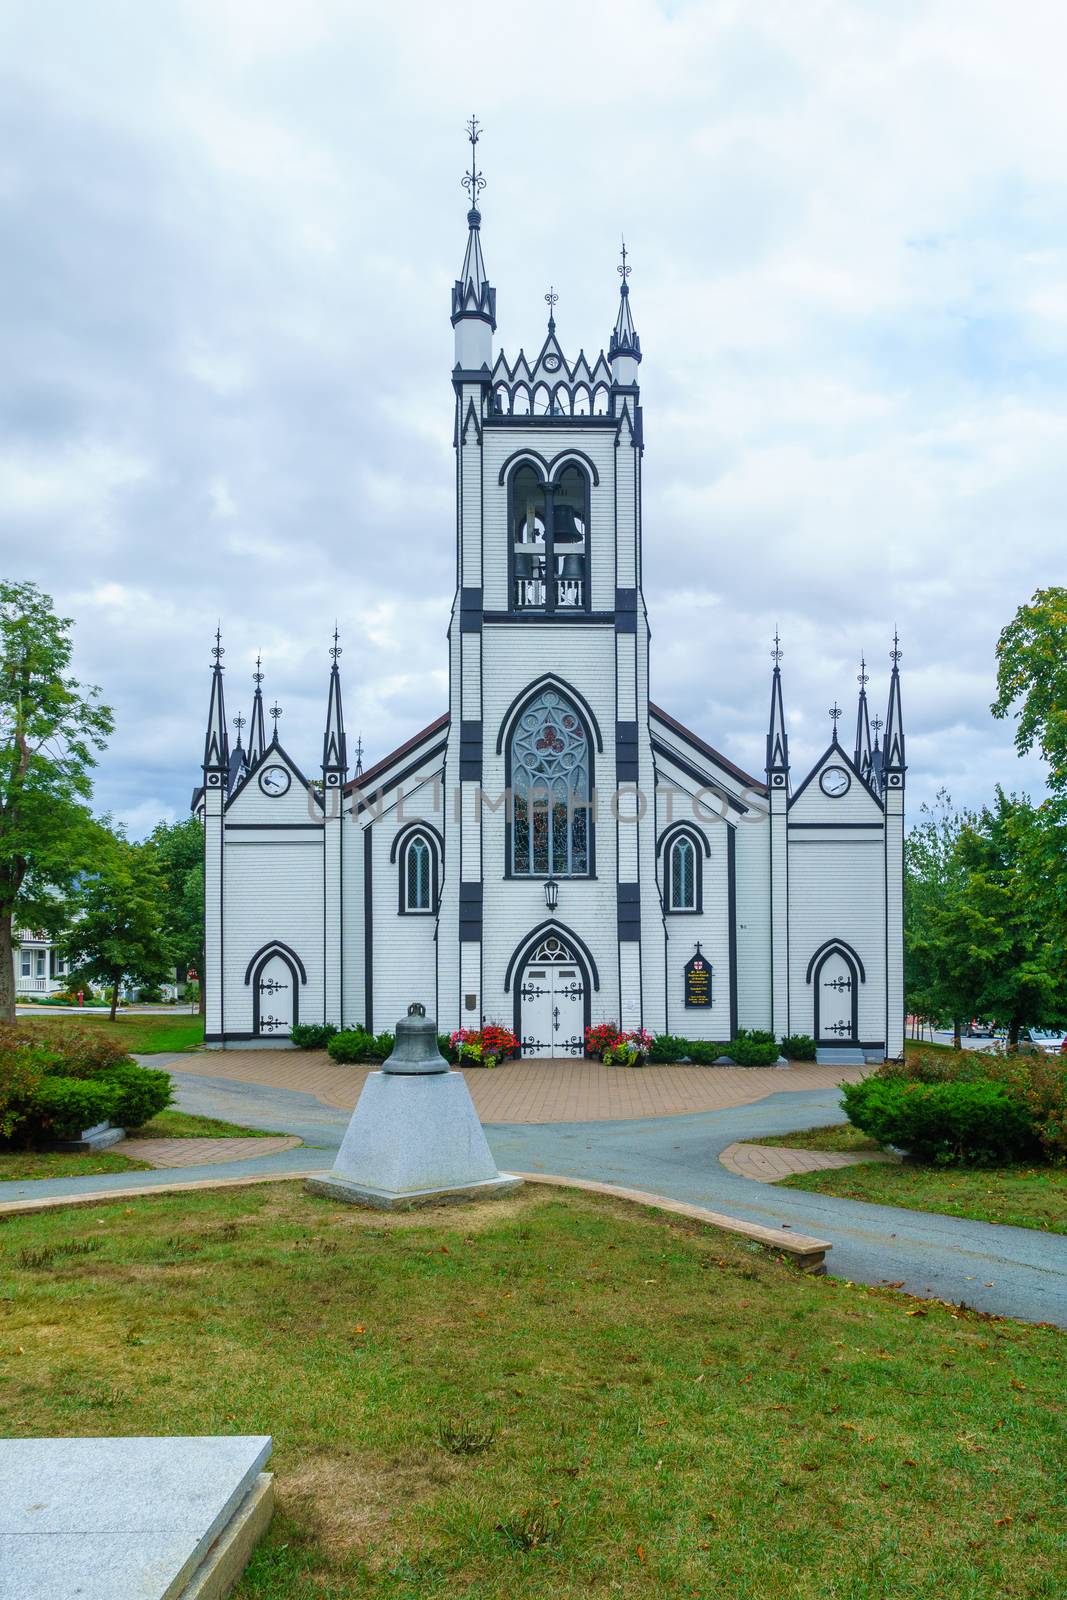 St. Johns Anglican Church, in Lunenburg by RnDmS